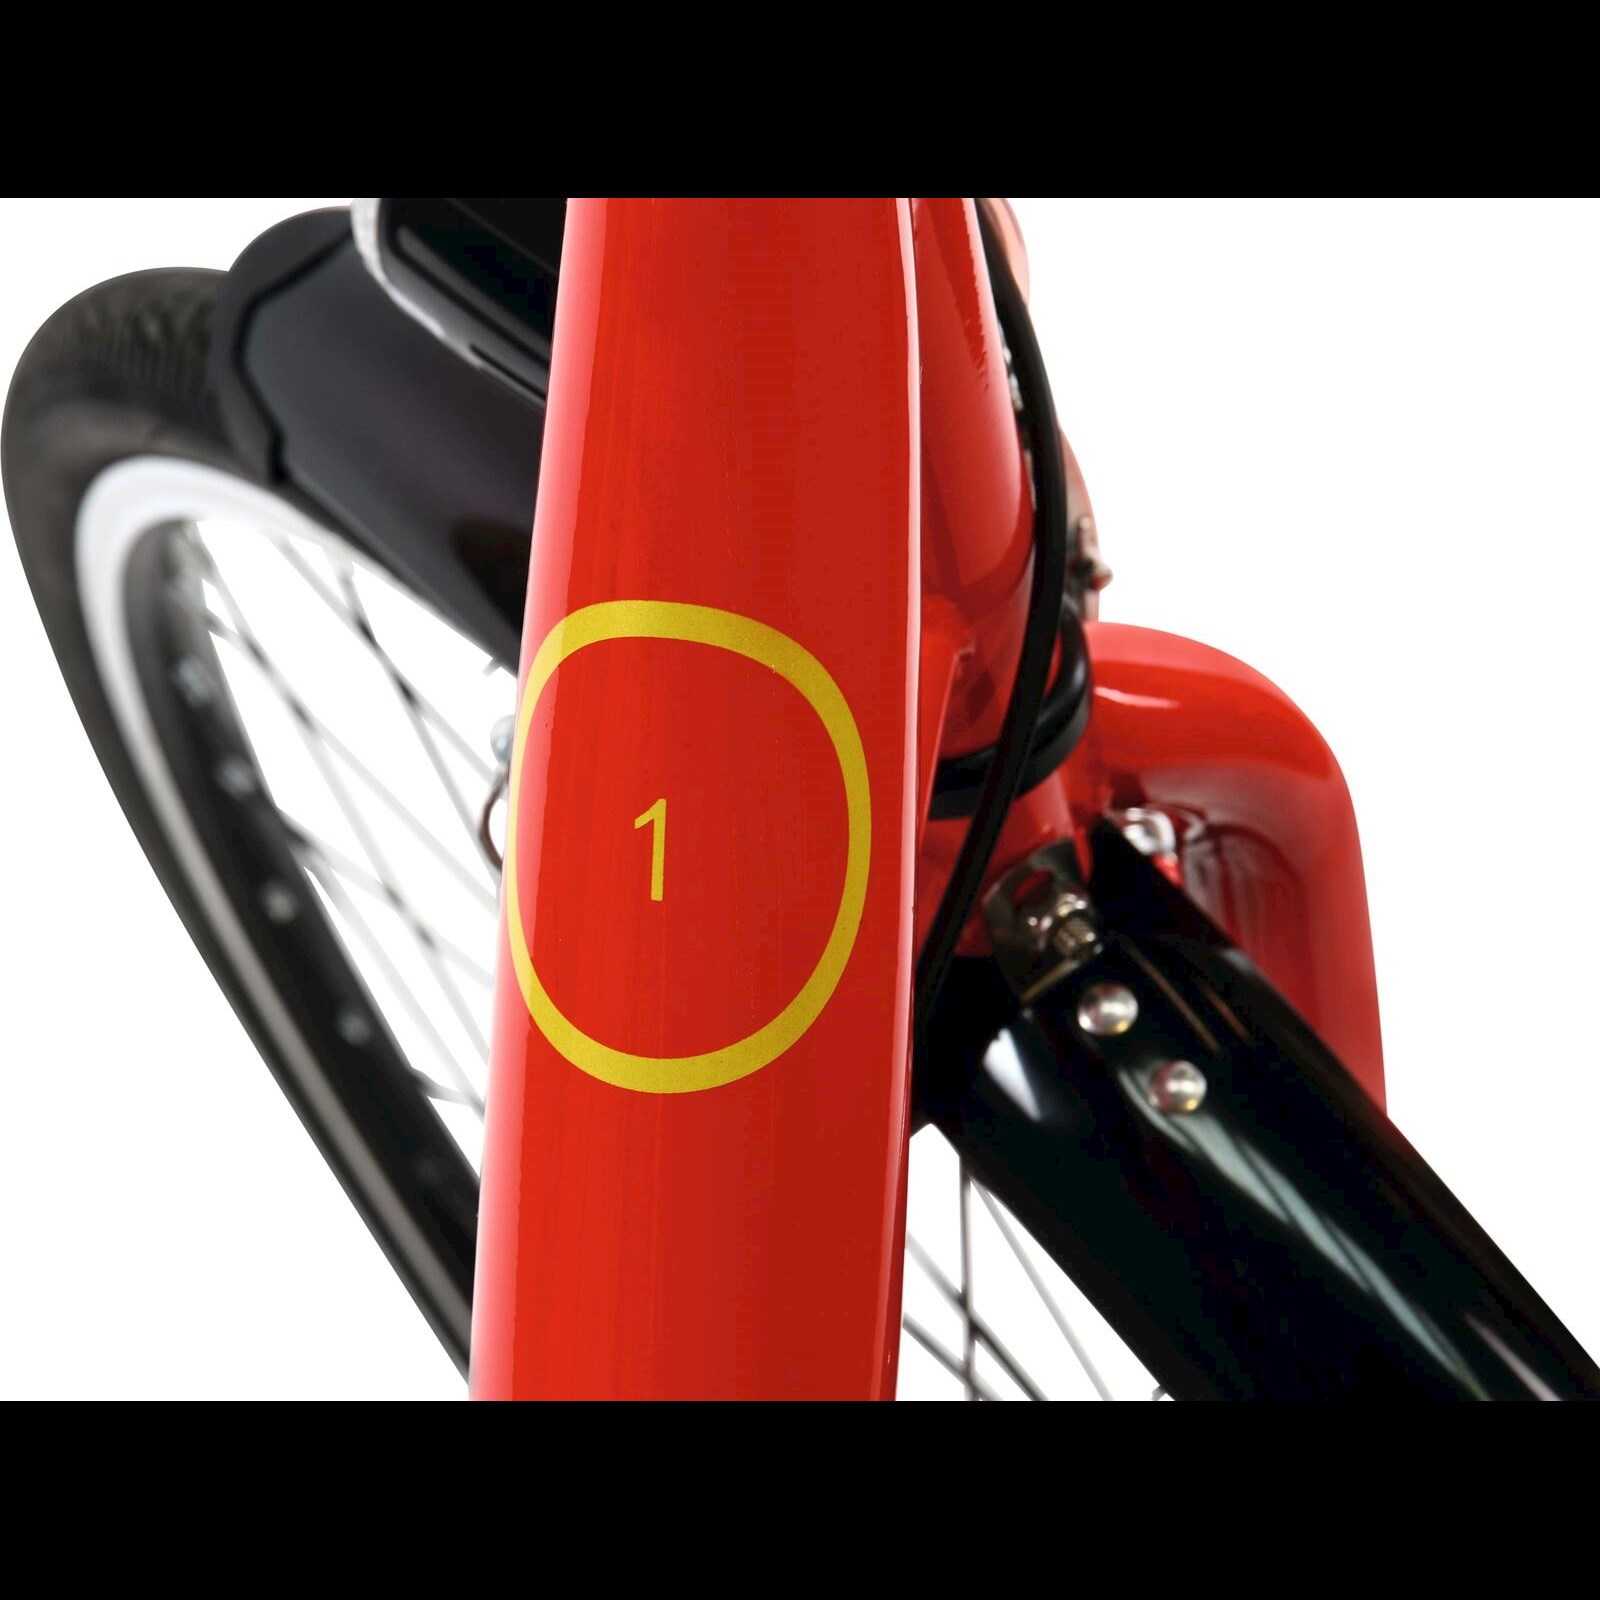 Fahrrad Simply red kaufen - City / Trekkingbikes - LANDI